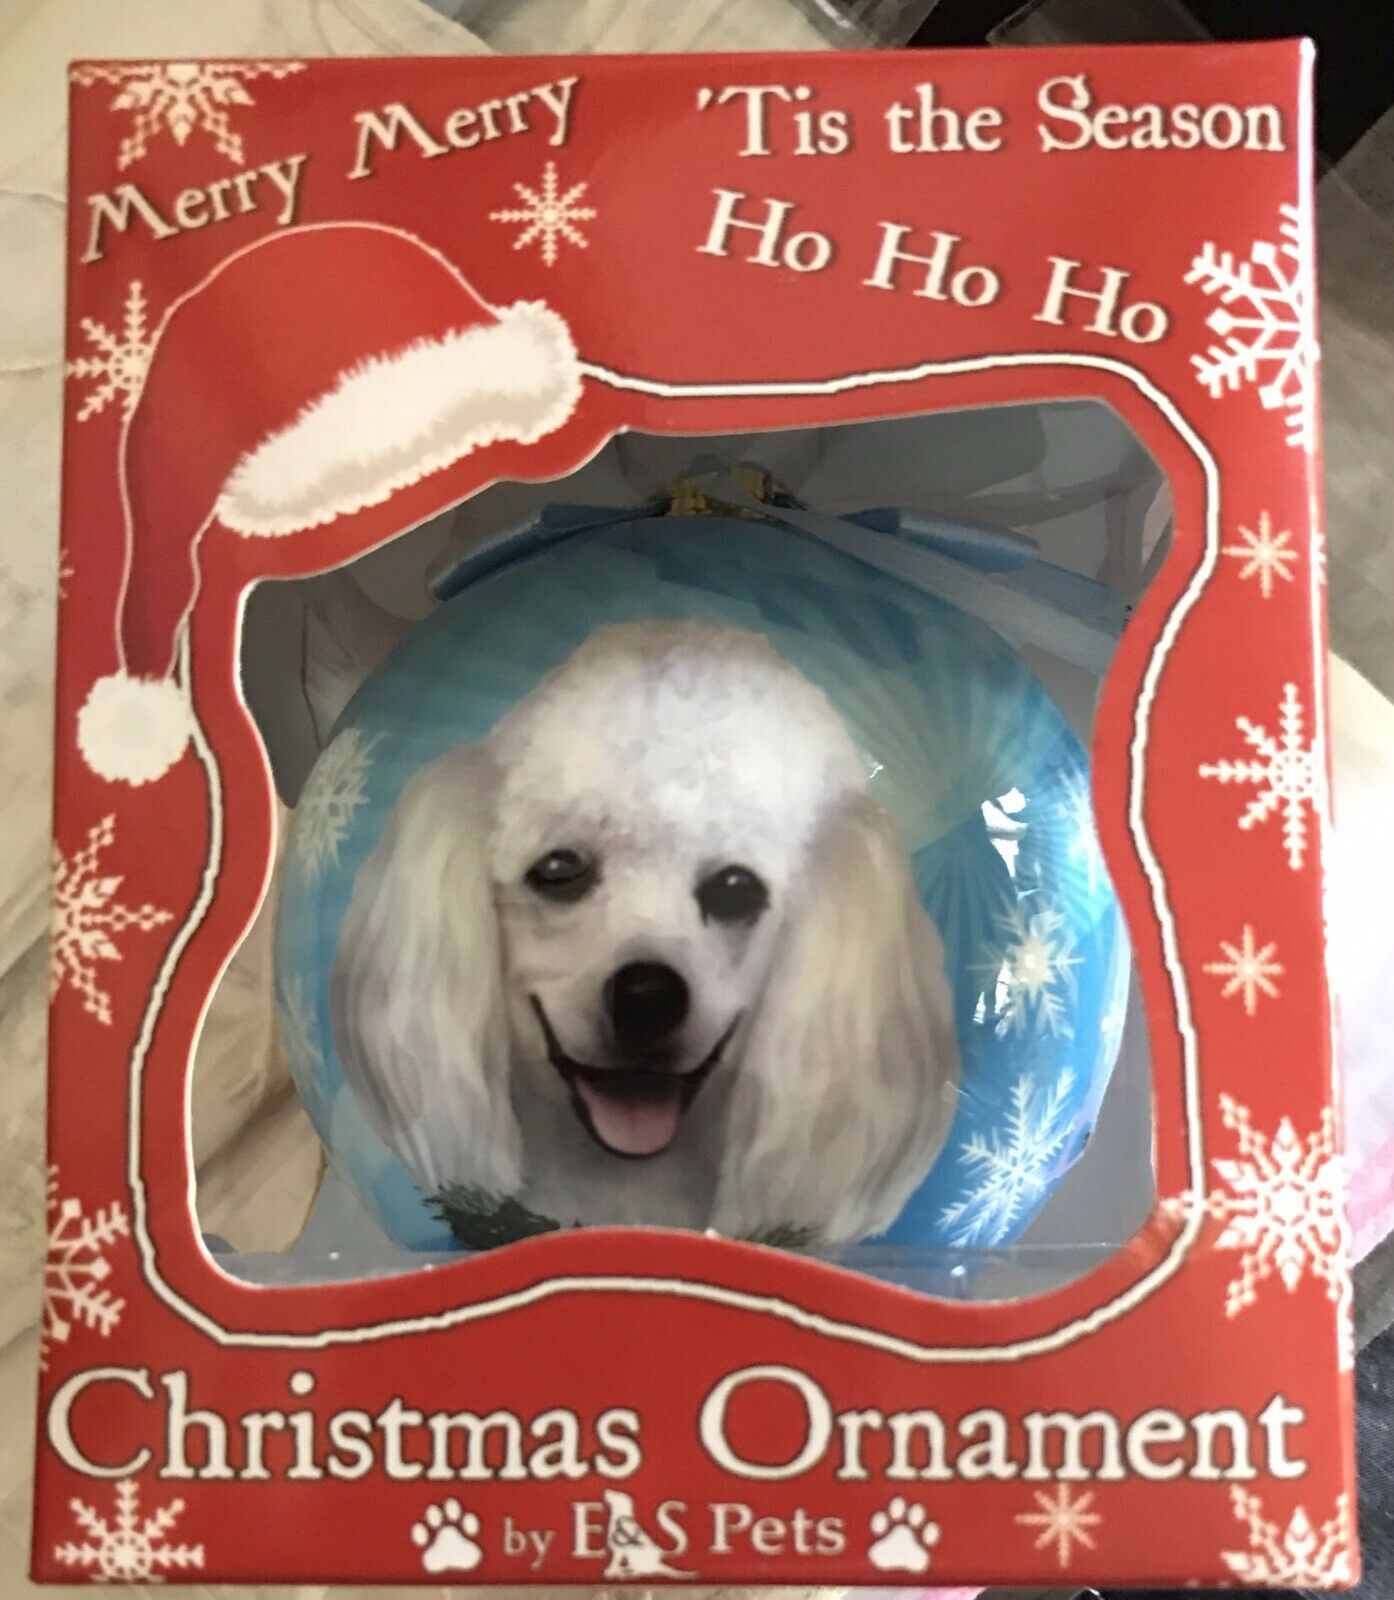 E & S Pets Christmas Xmas Ball Ornament White Poodle Dog Shatter Proof